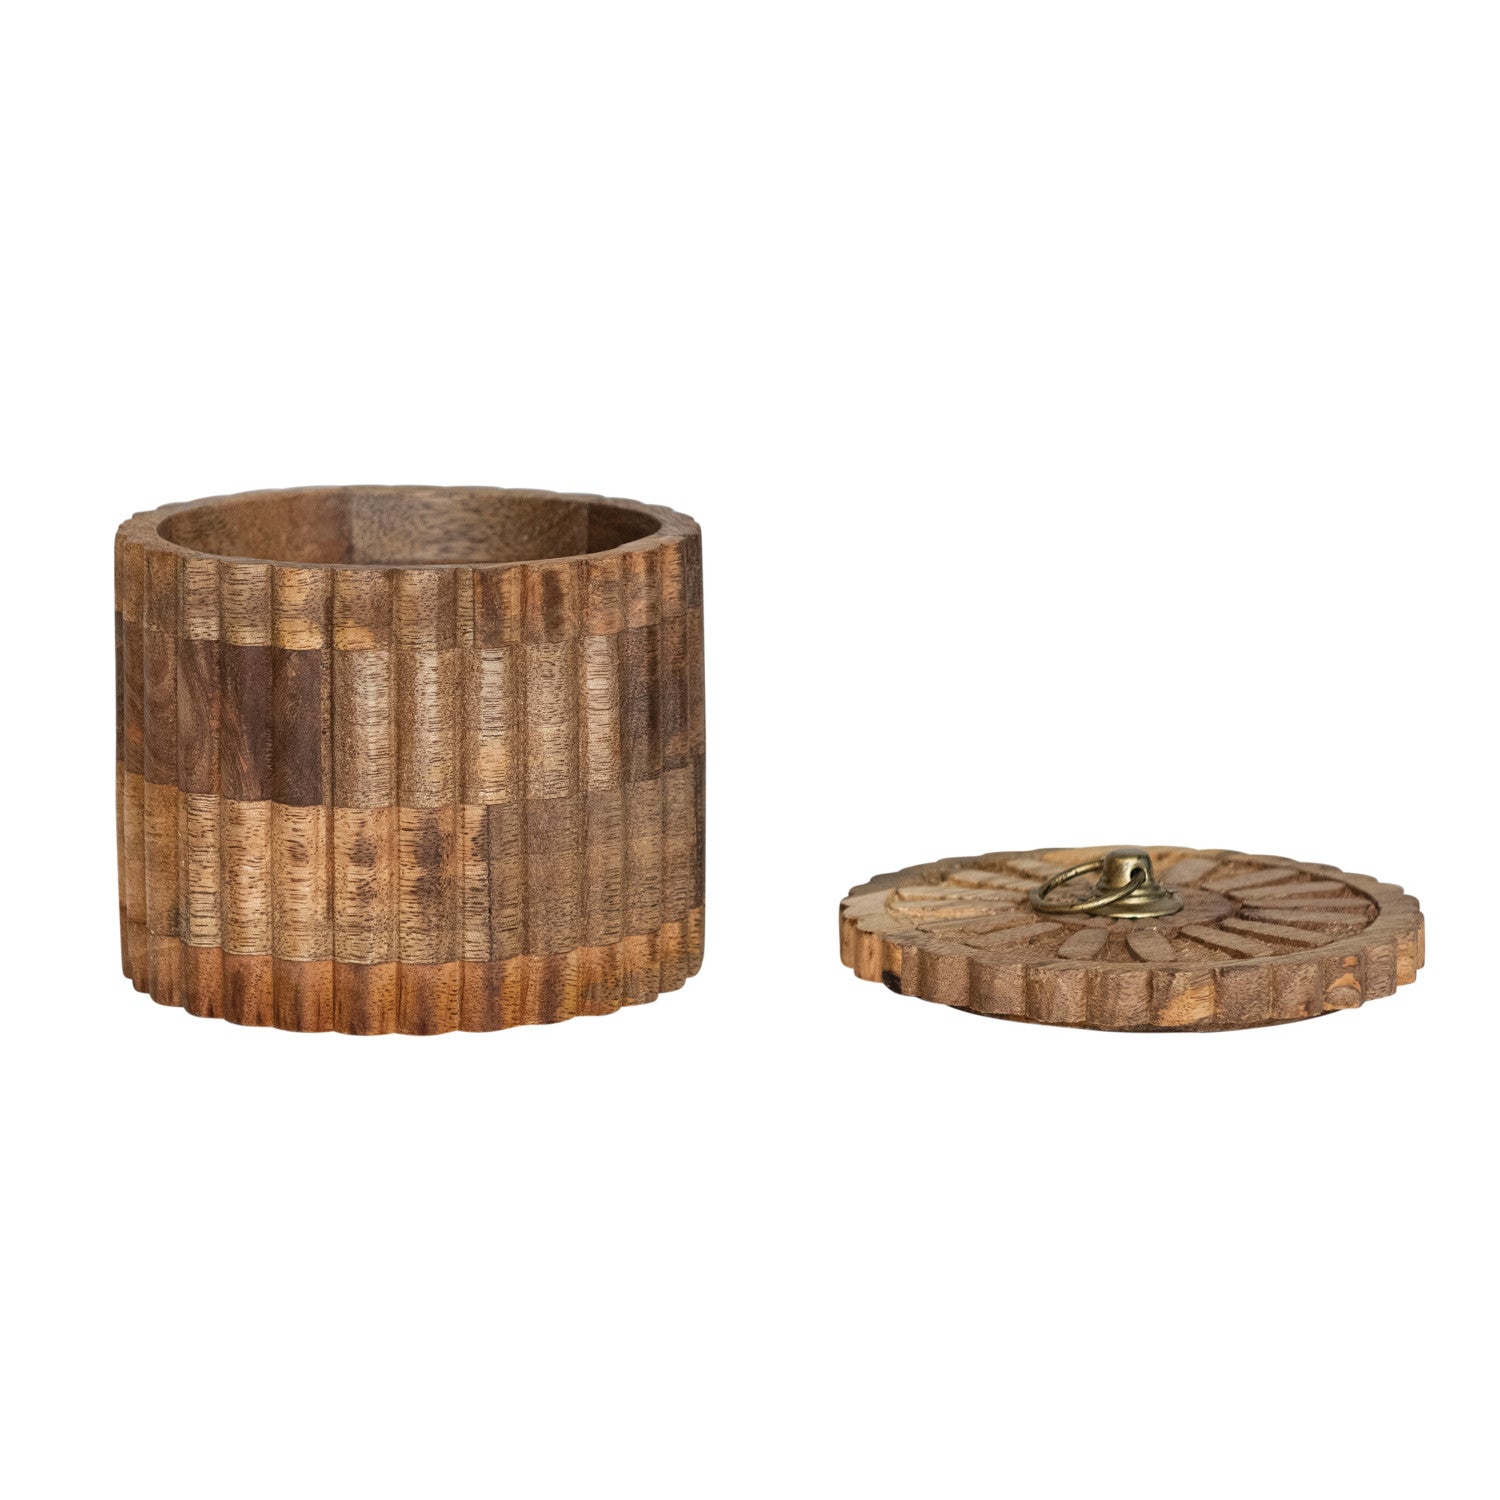 Carved Wood Box w/ Lid